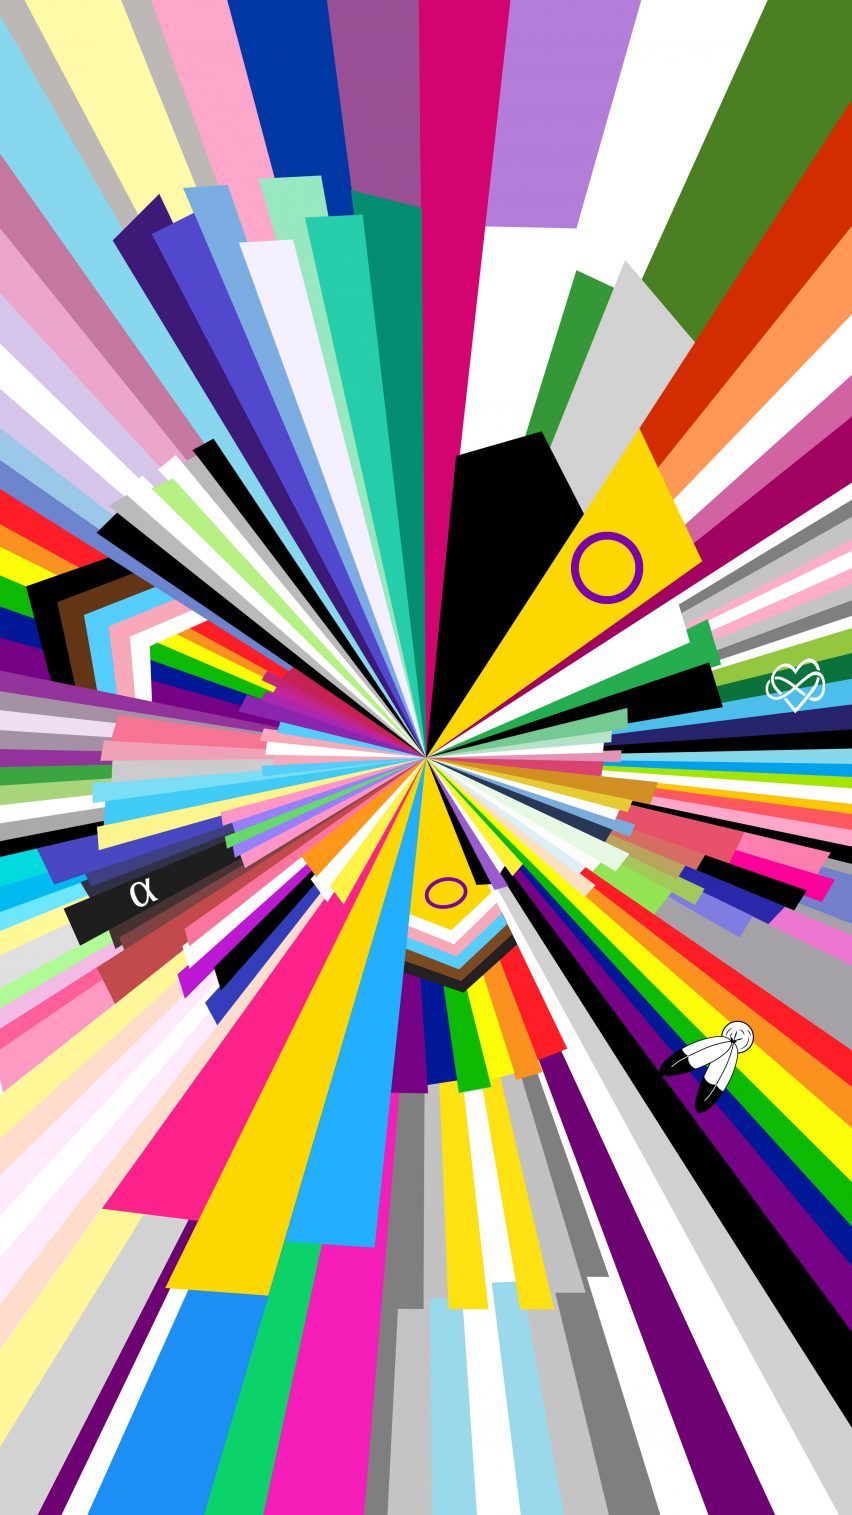 Microsoft 2022 pride flag in portrait dimensions for phone wallpaper